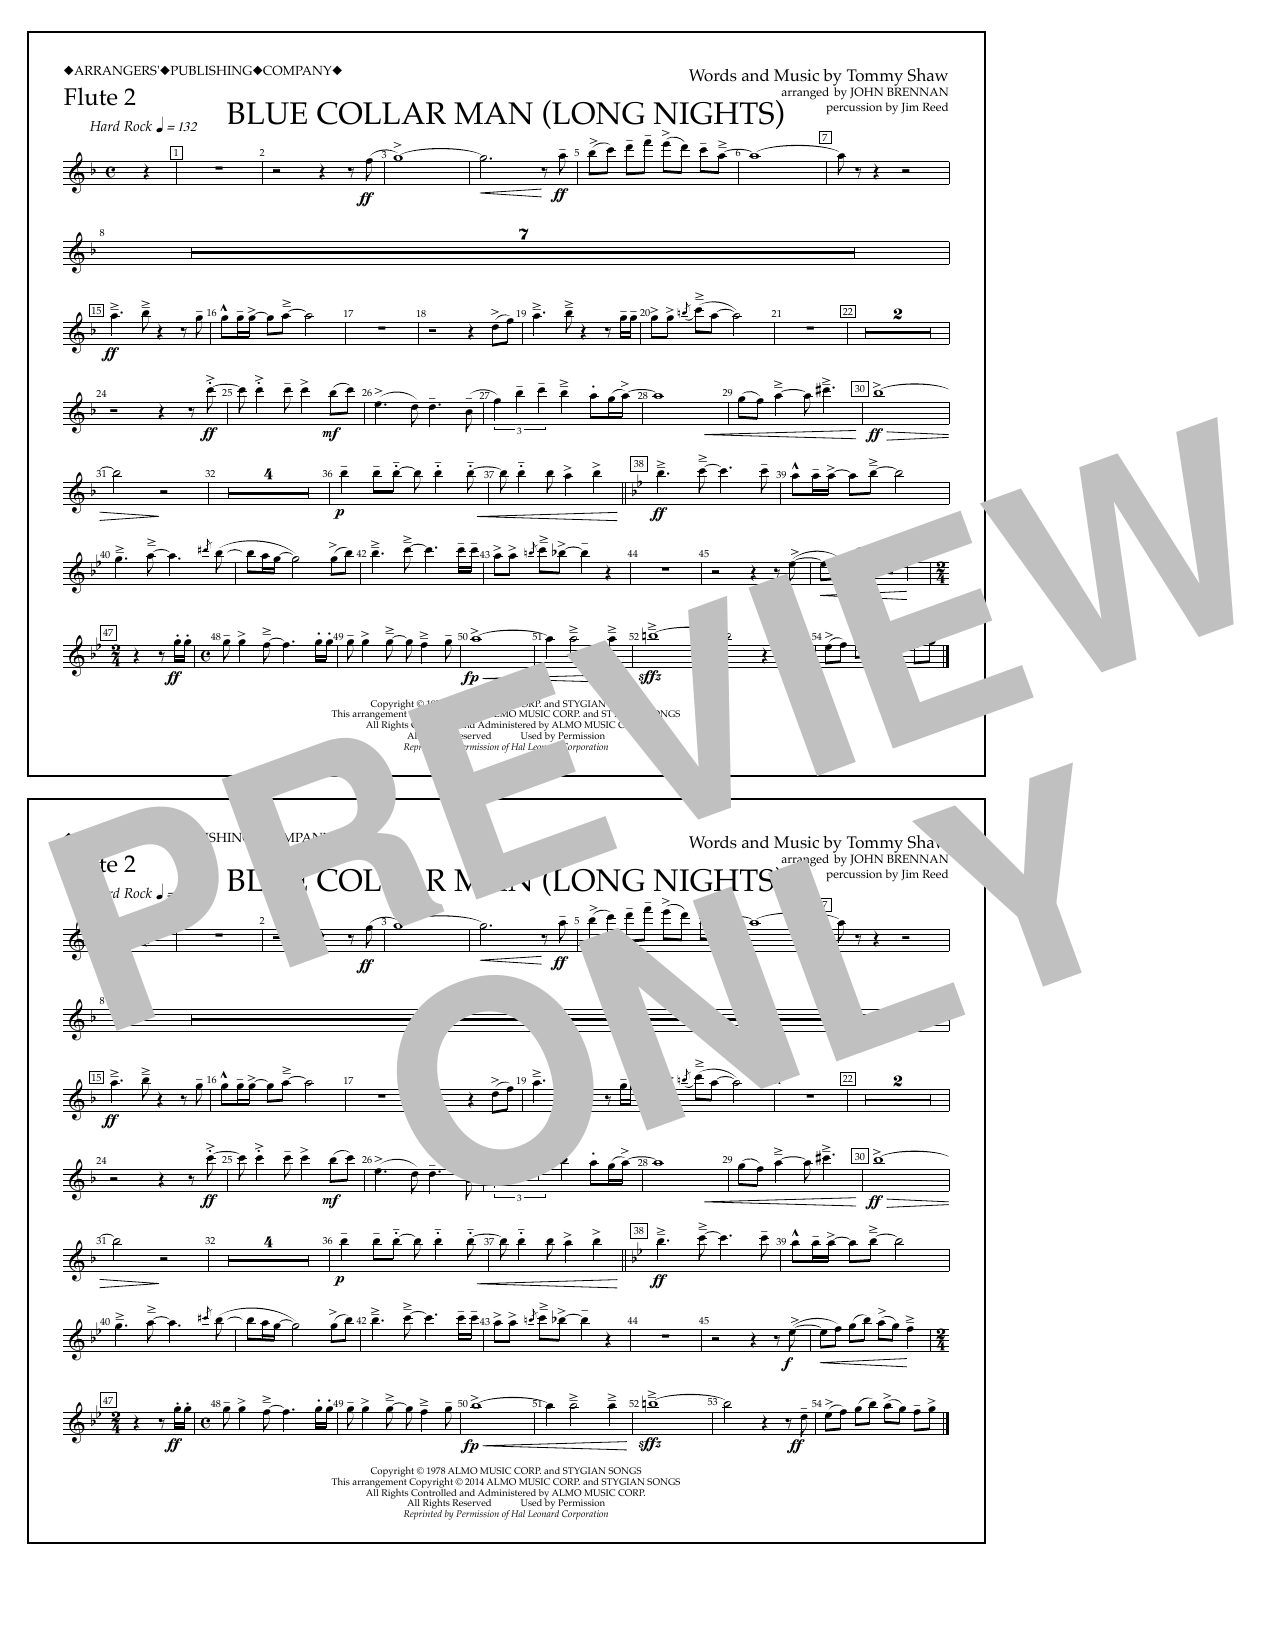 John Brennan Blue Collar Man (Long Nights) - Flute 2 Sheet Music Notes & Chords for Marching Band - Download or Print PDF